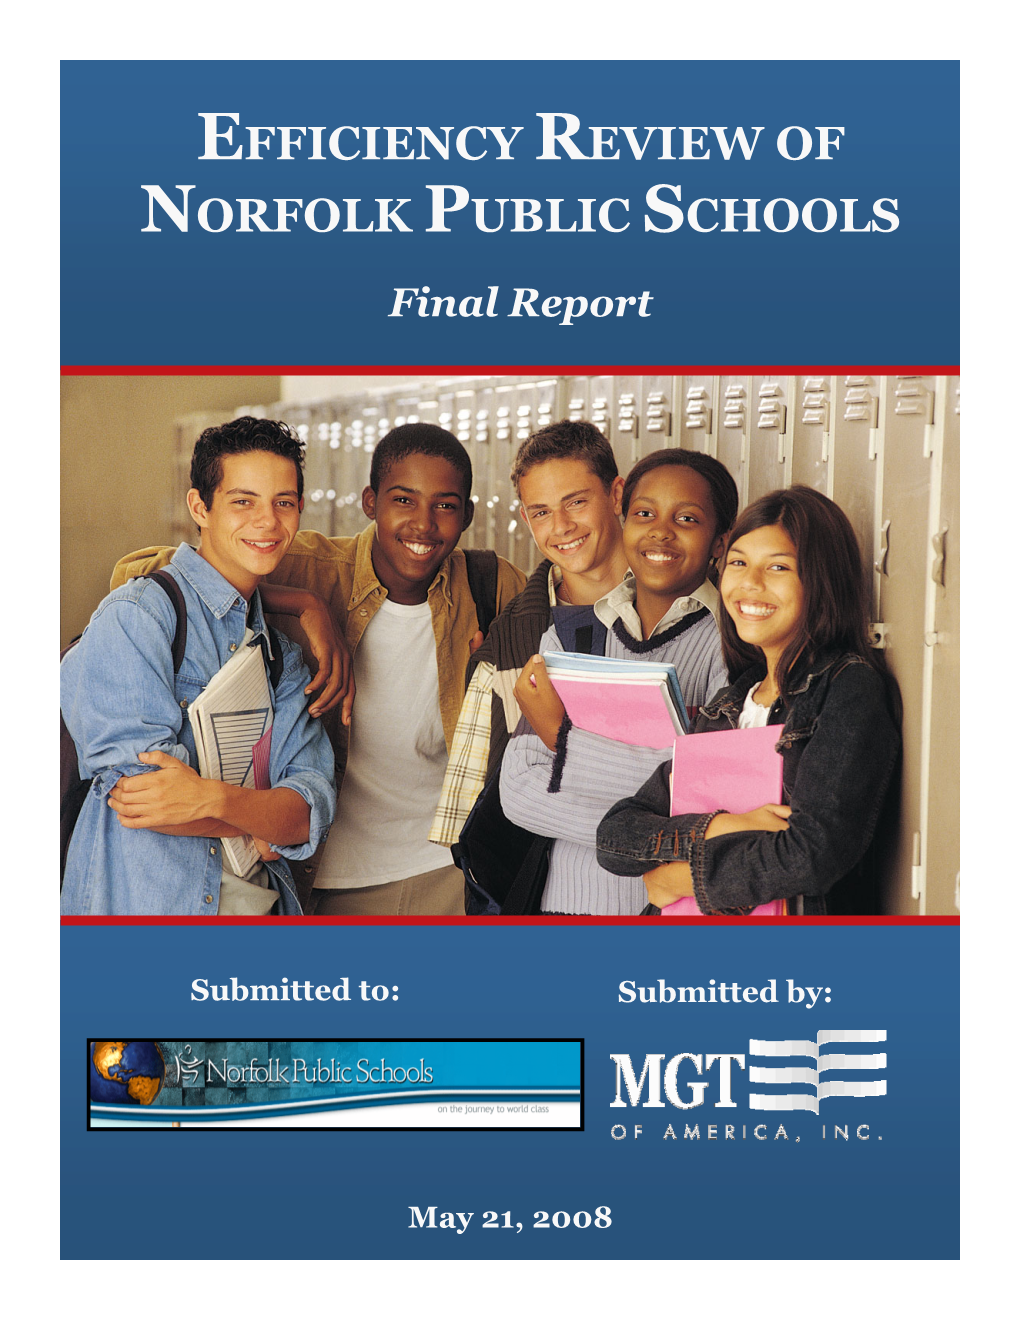 NORFOLK PUBLIC SCHOOLS Final Report